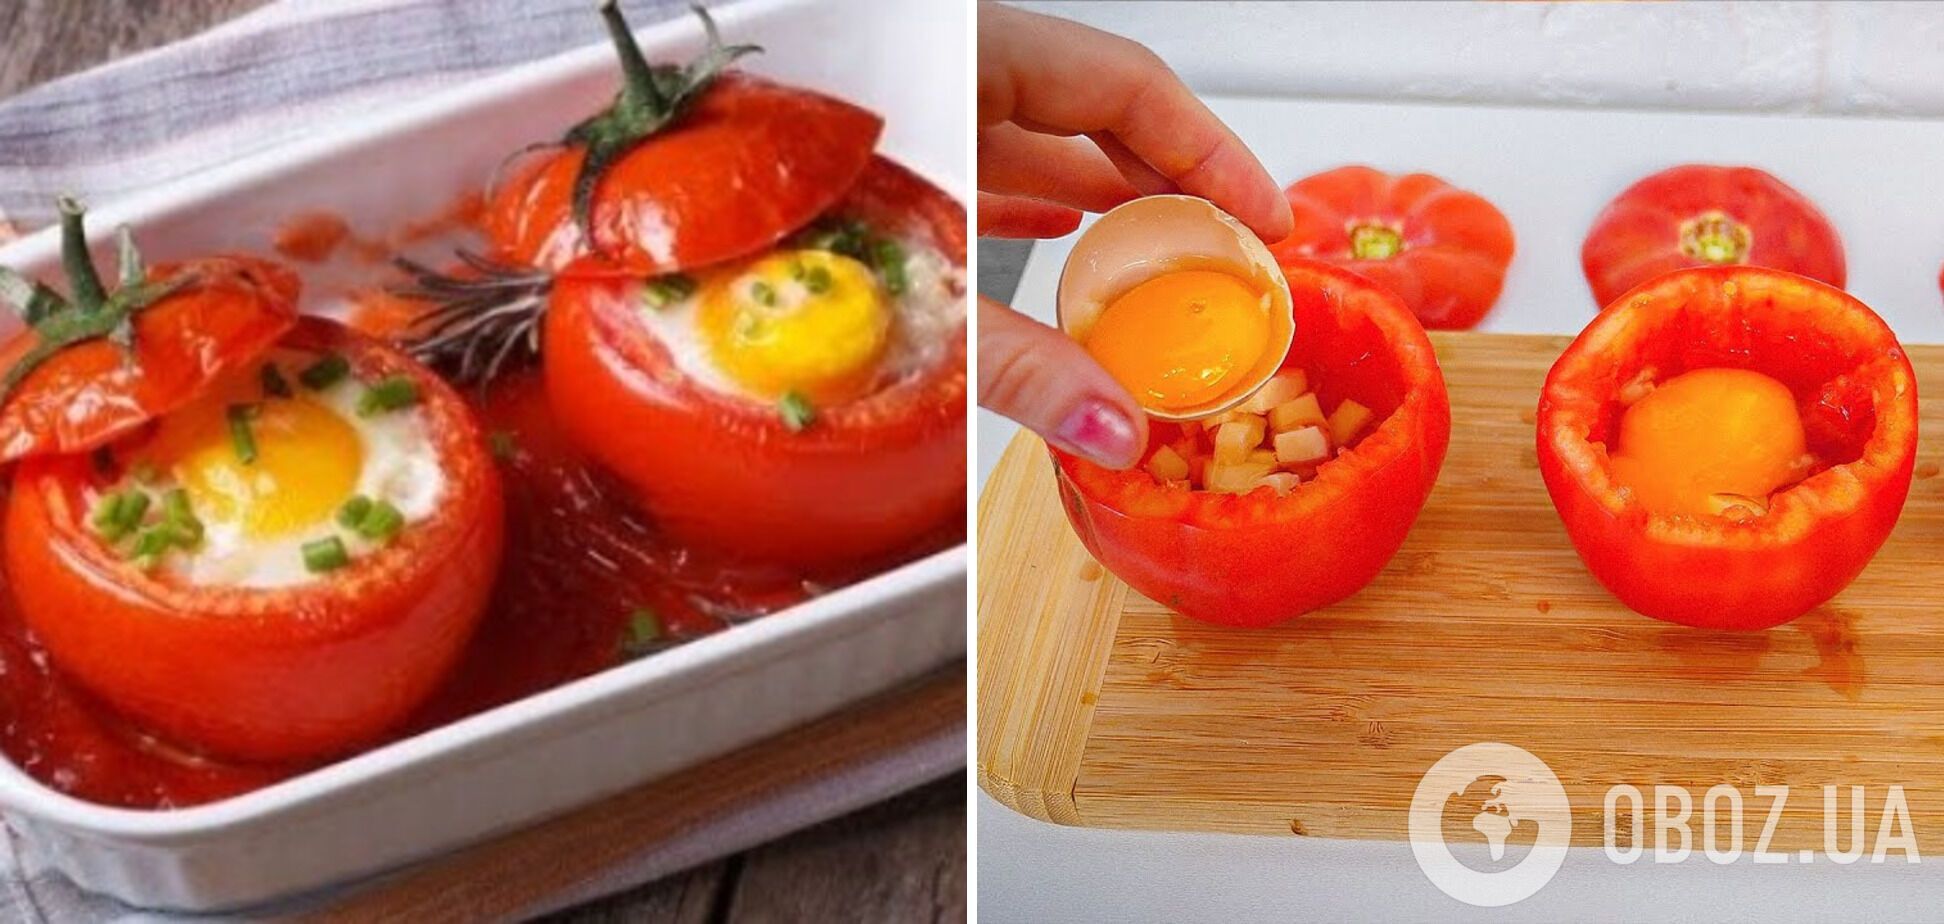 Яичница в помидорах на завтрак